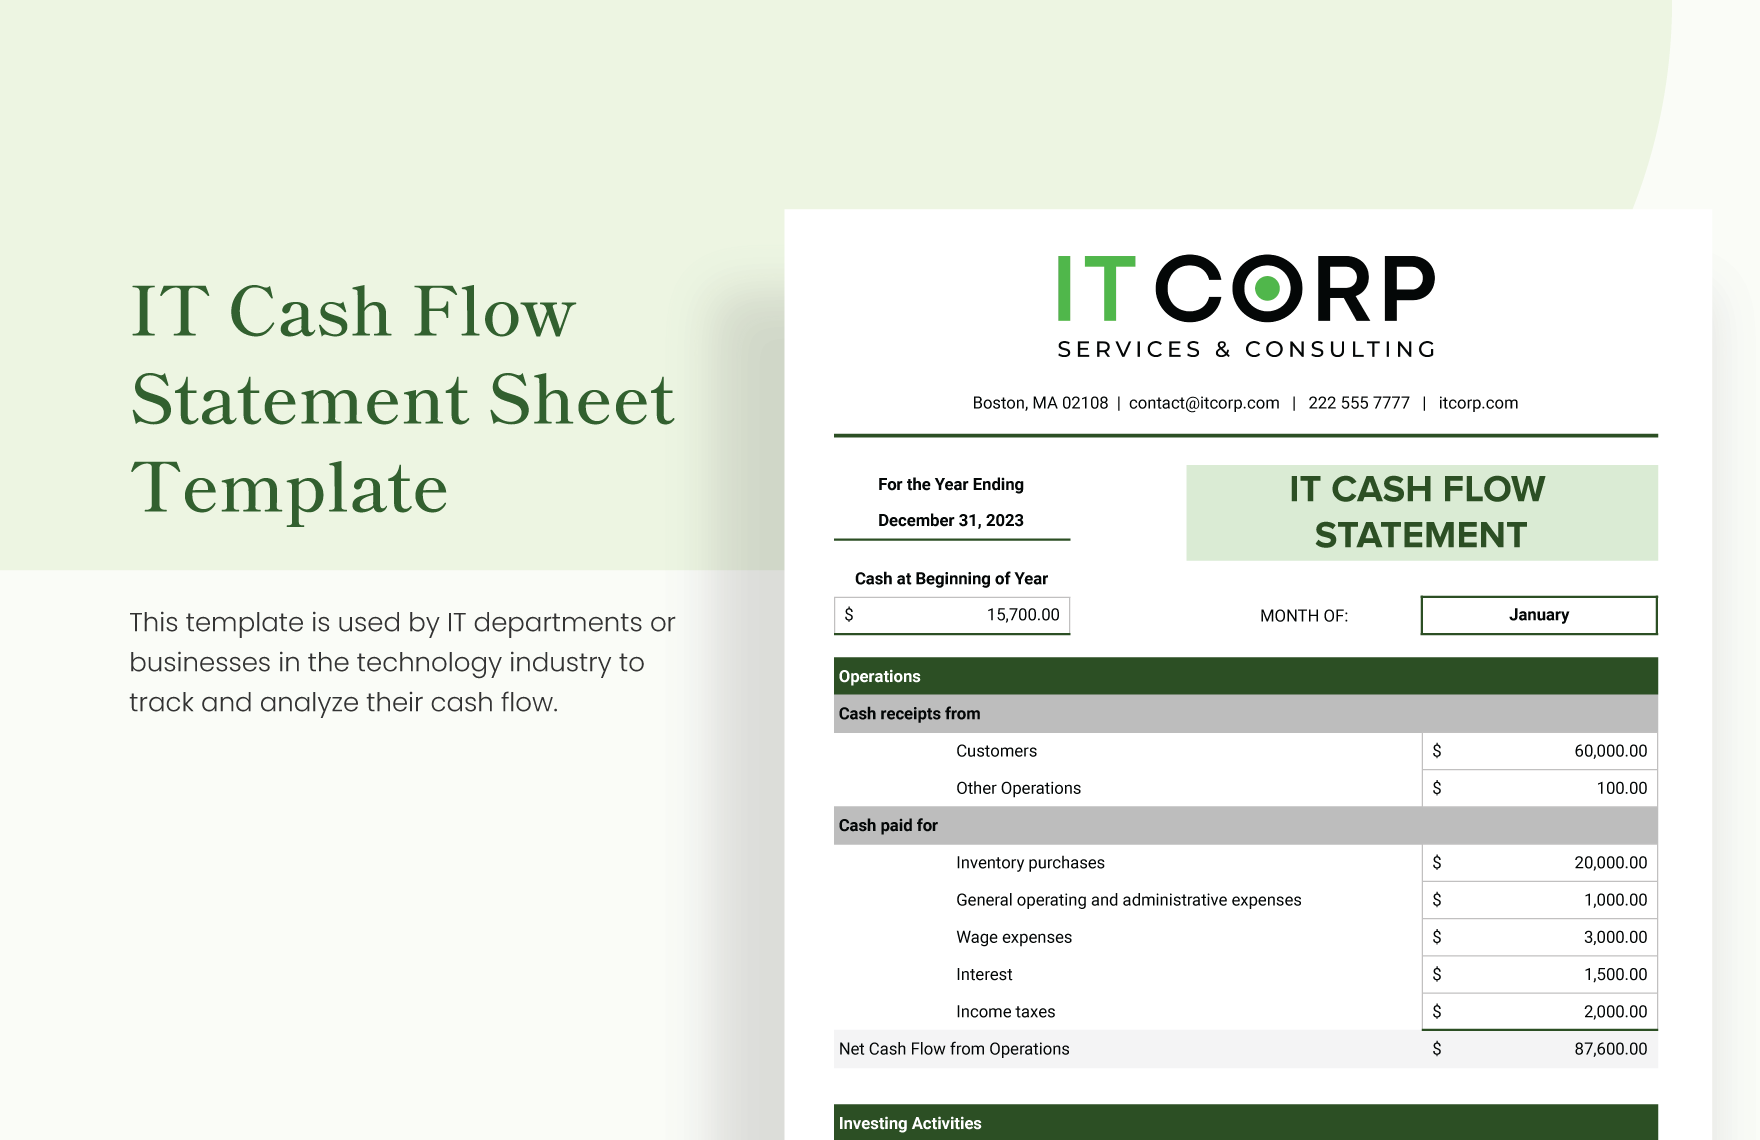 IT Cash Flow Statement Sheet Template